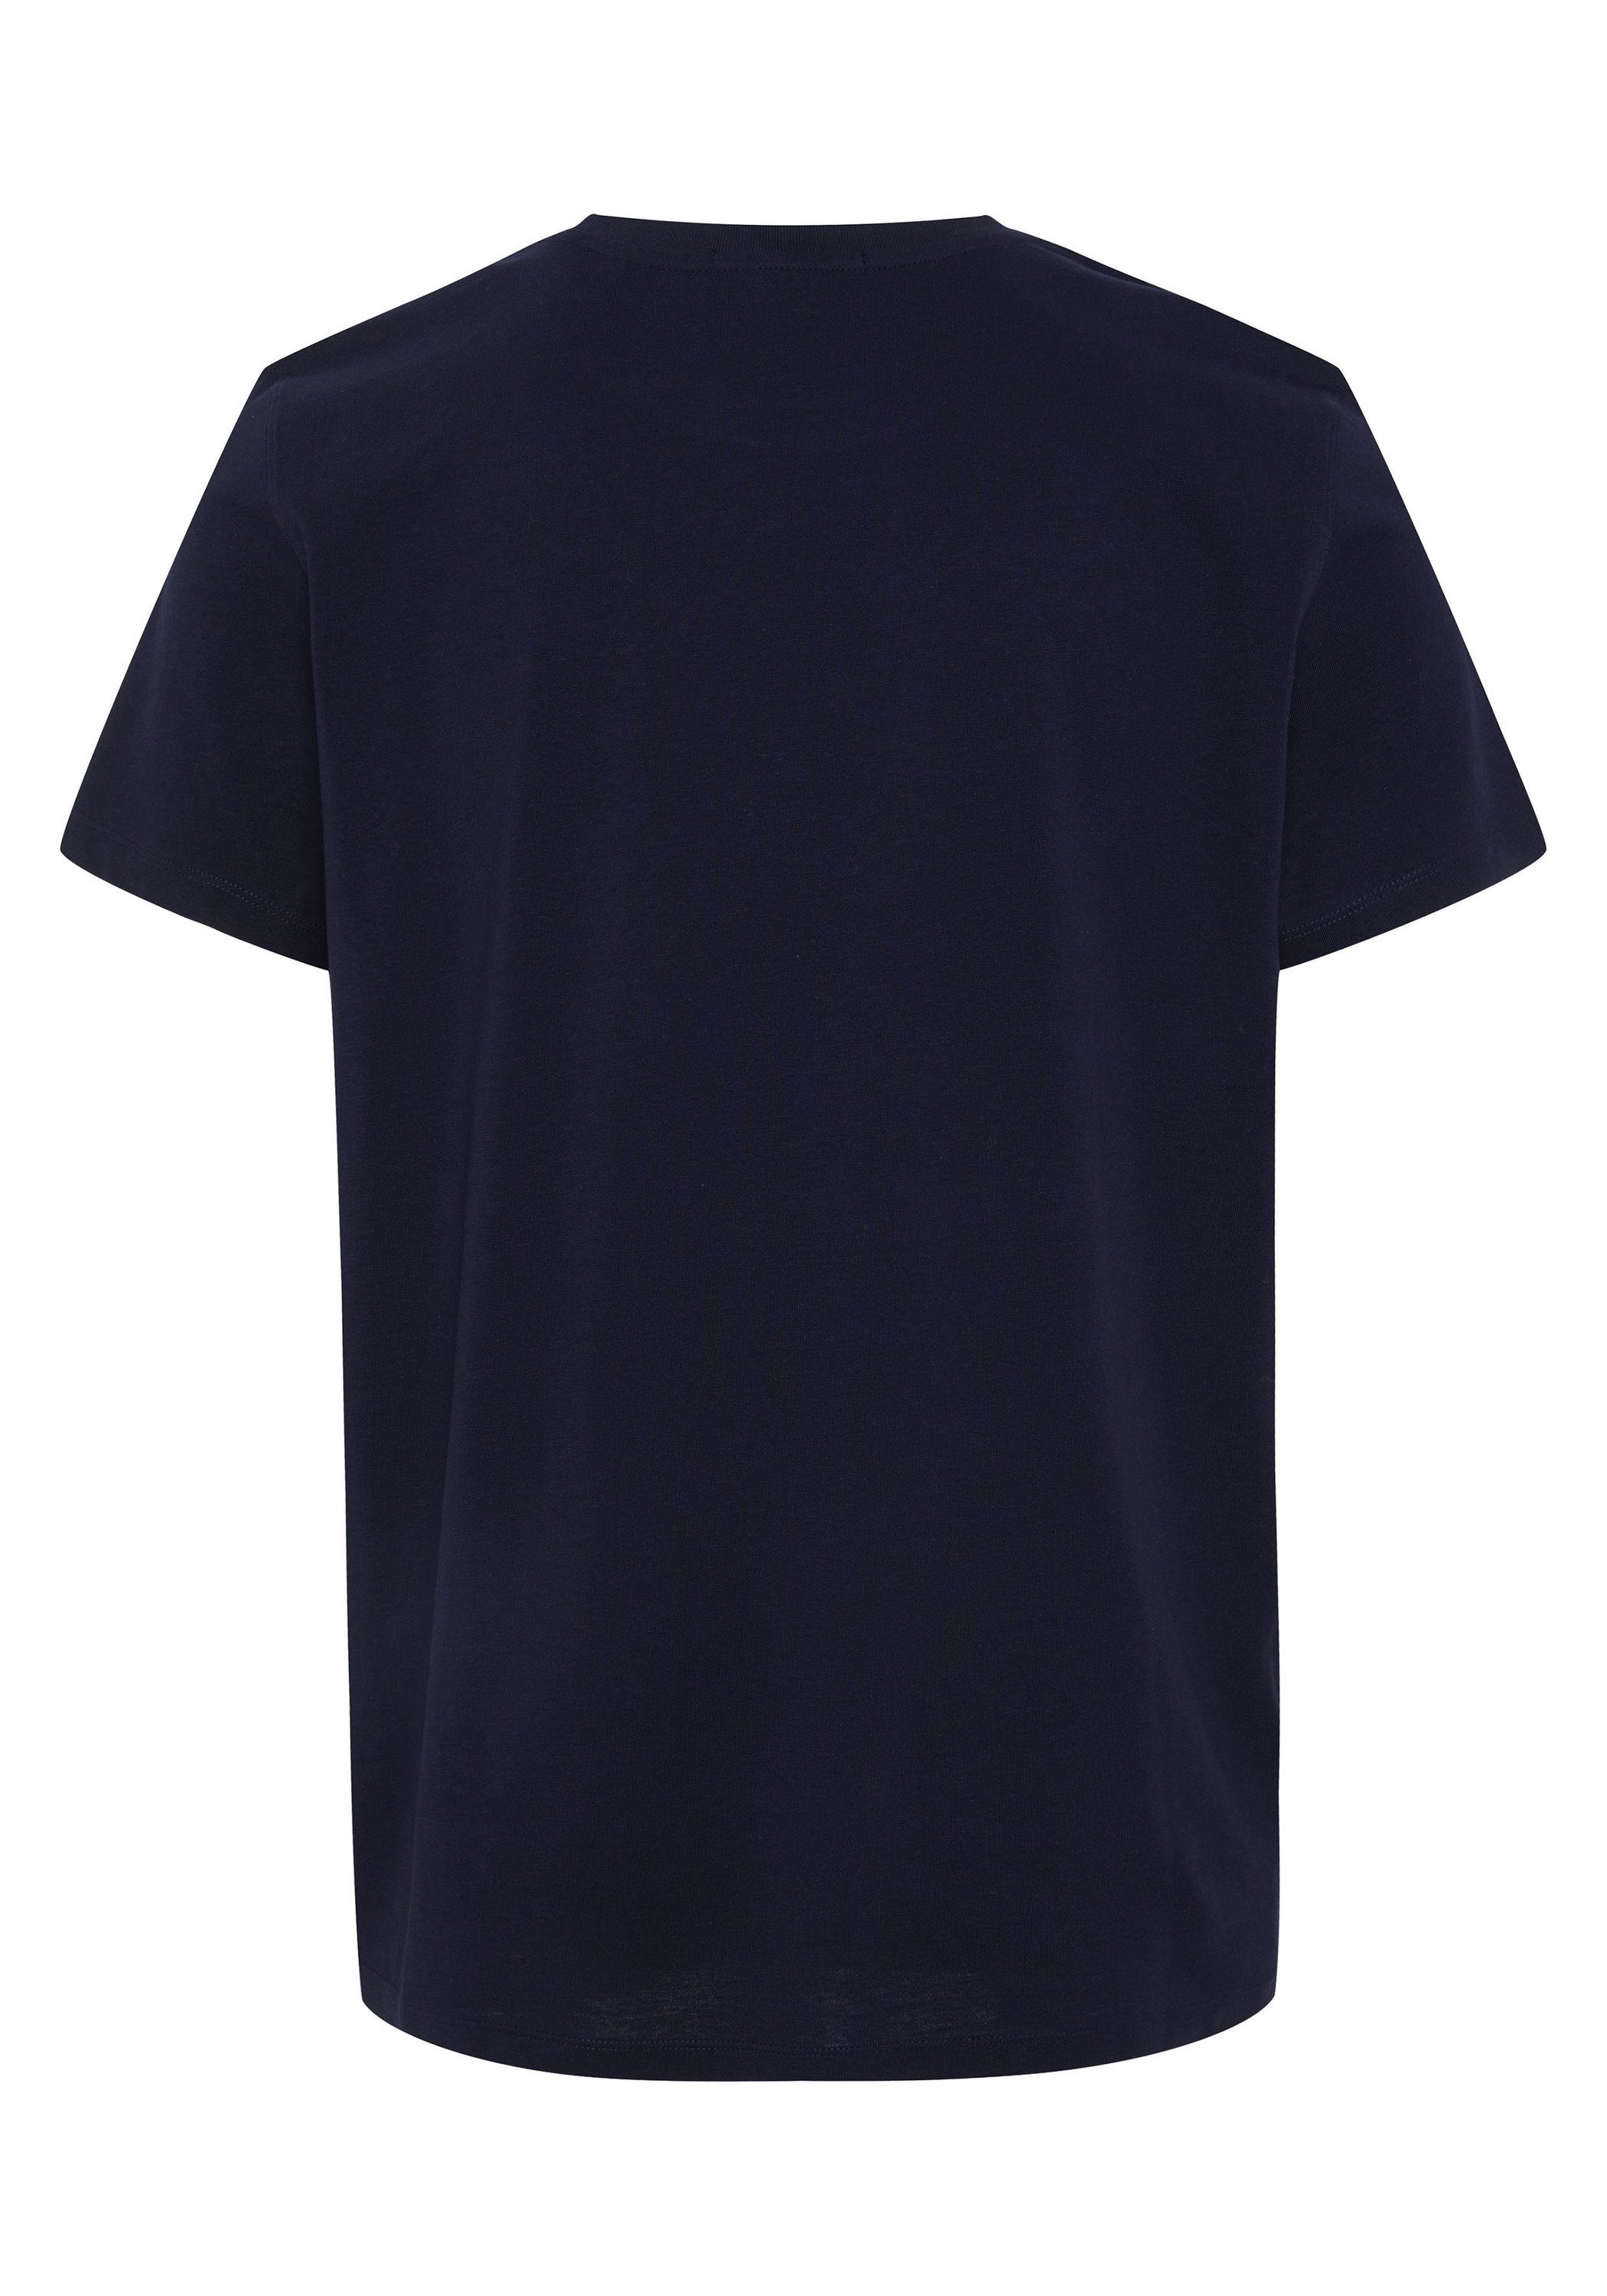 Chiemsee Night 1 T-Shirt im plusminus-Design 19-3924 Sky Print-Shirt